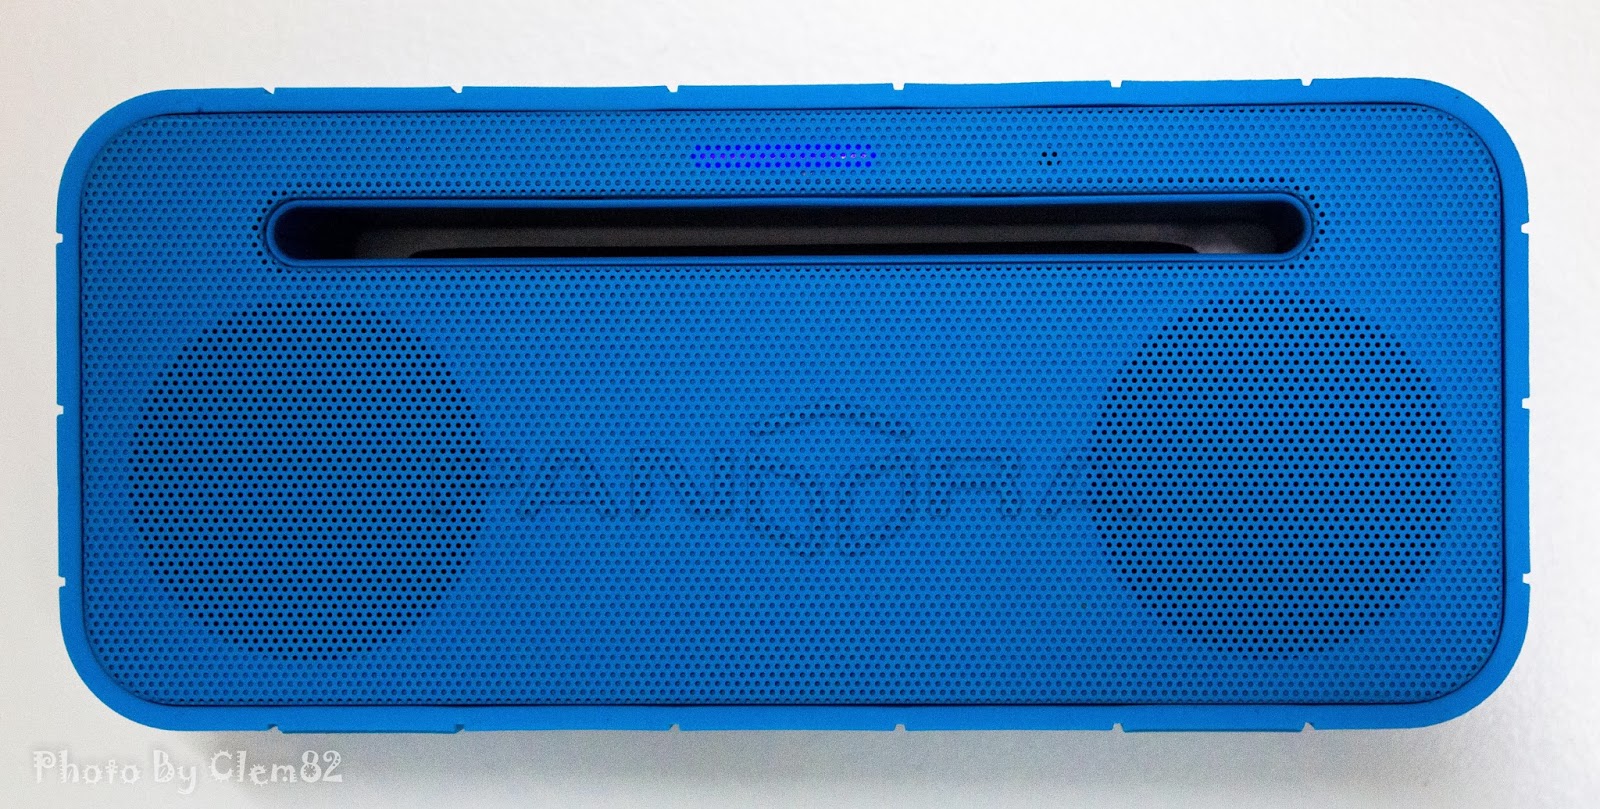 Opening Pandora's Box: SonicGear Pandora Wireless Bluetooth Media Player Series 154